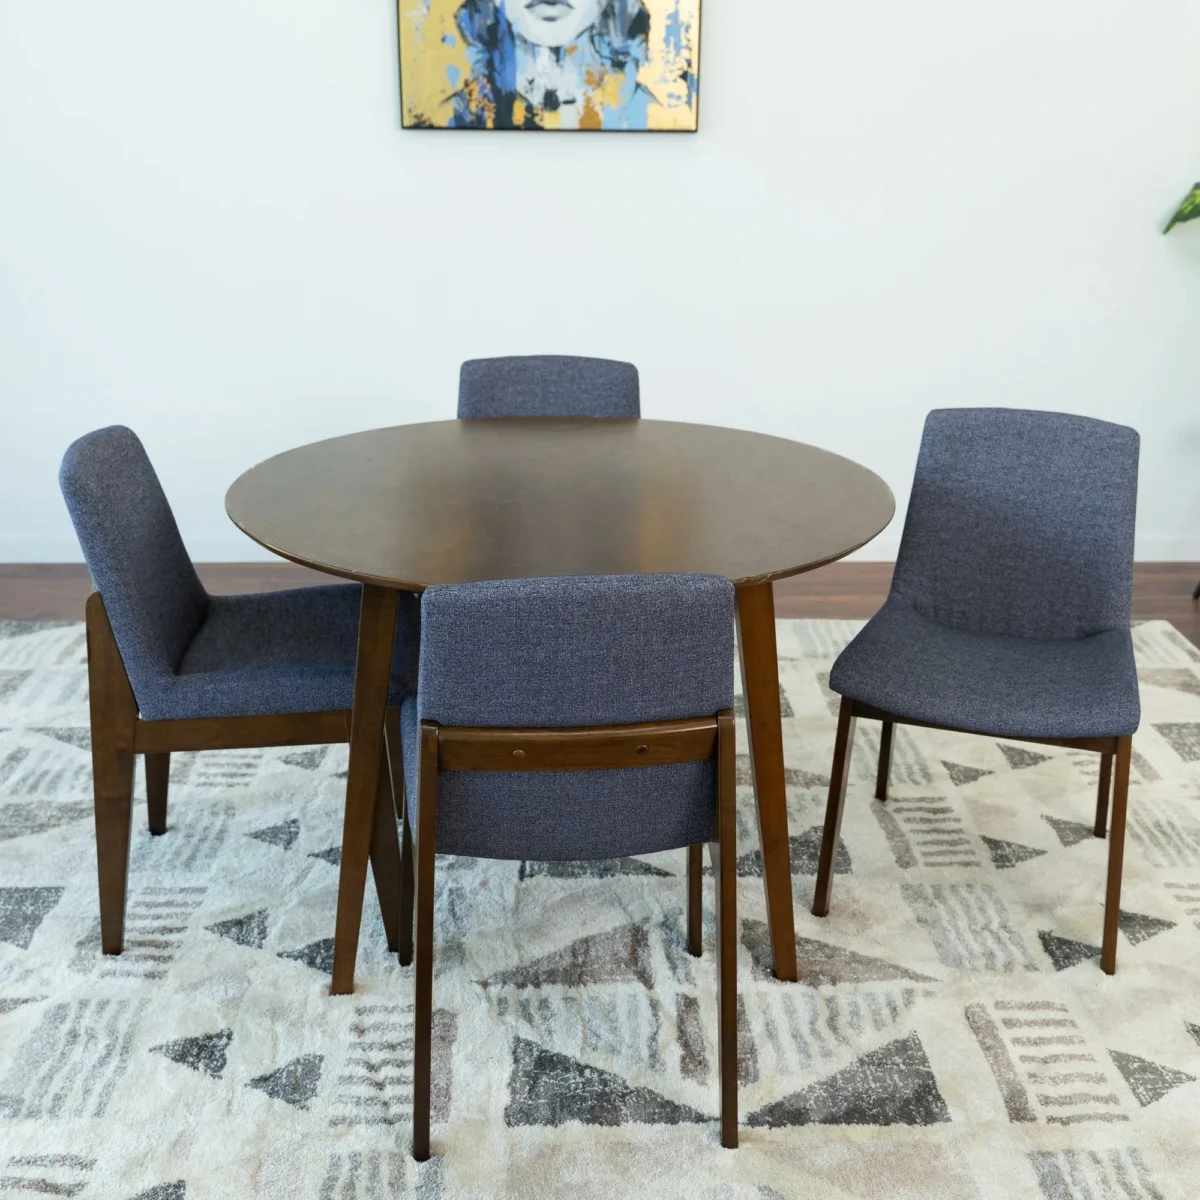 Aprodz Kolaran Round Dining Table Set | 4-seater | Upholstered Chairs